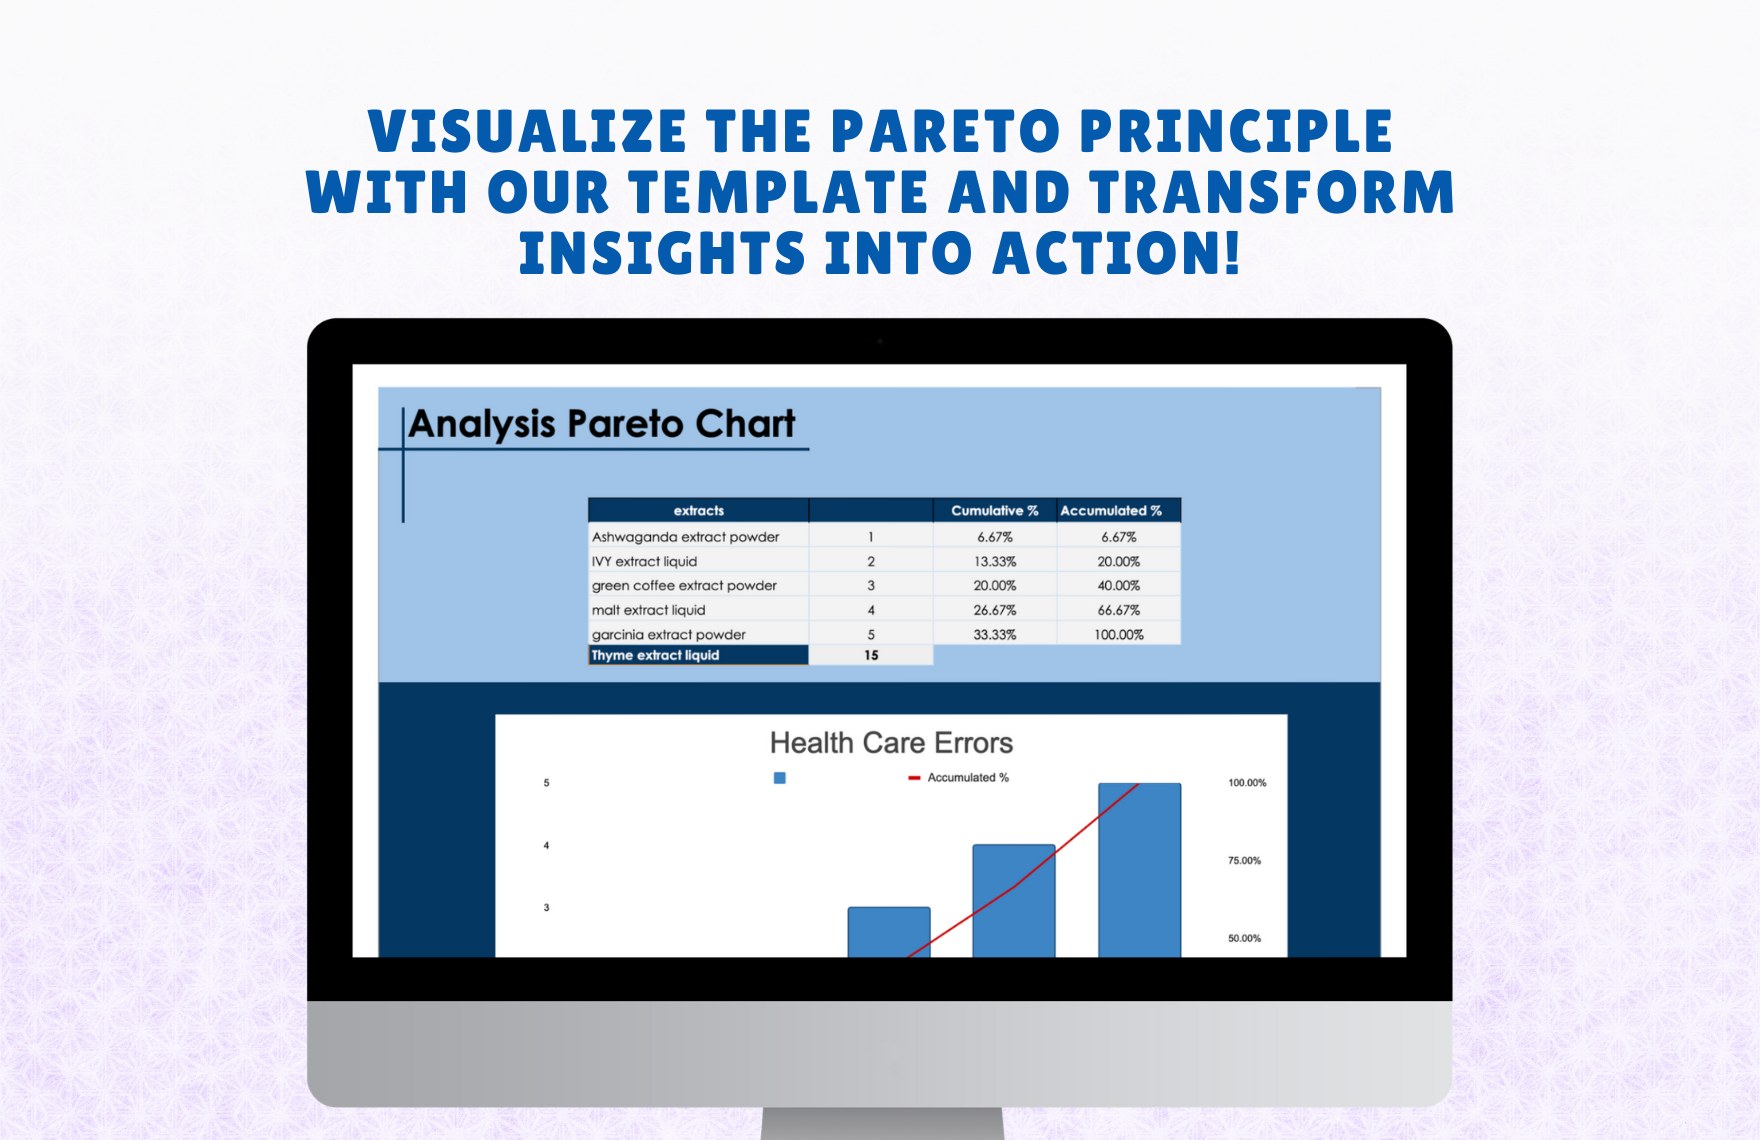 Analysis Pareto Chart Template